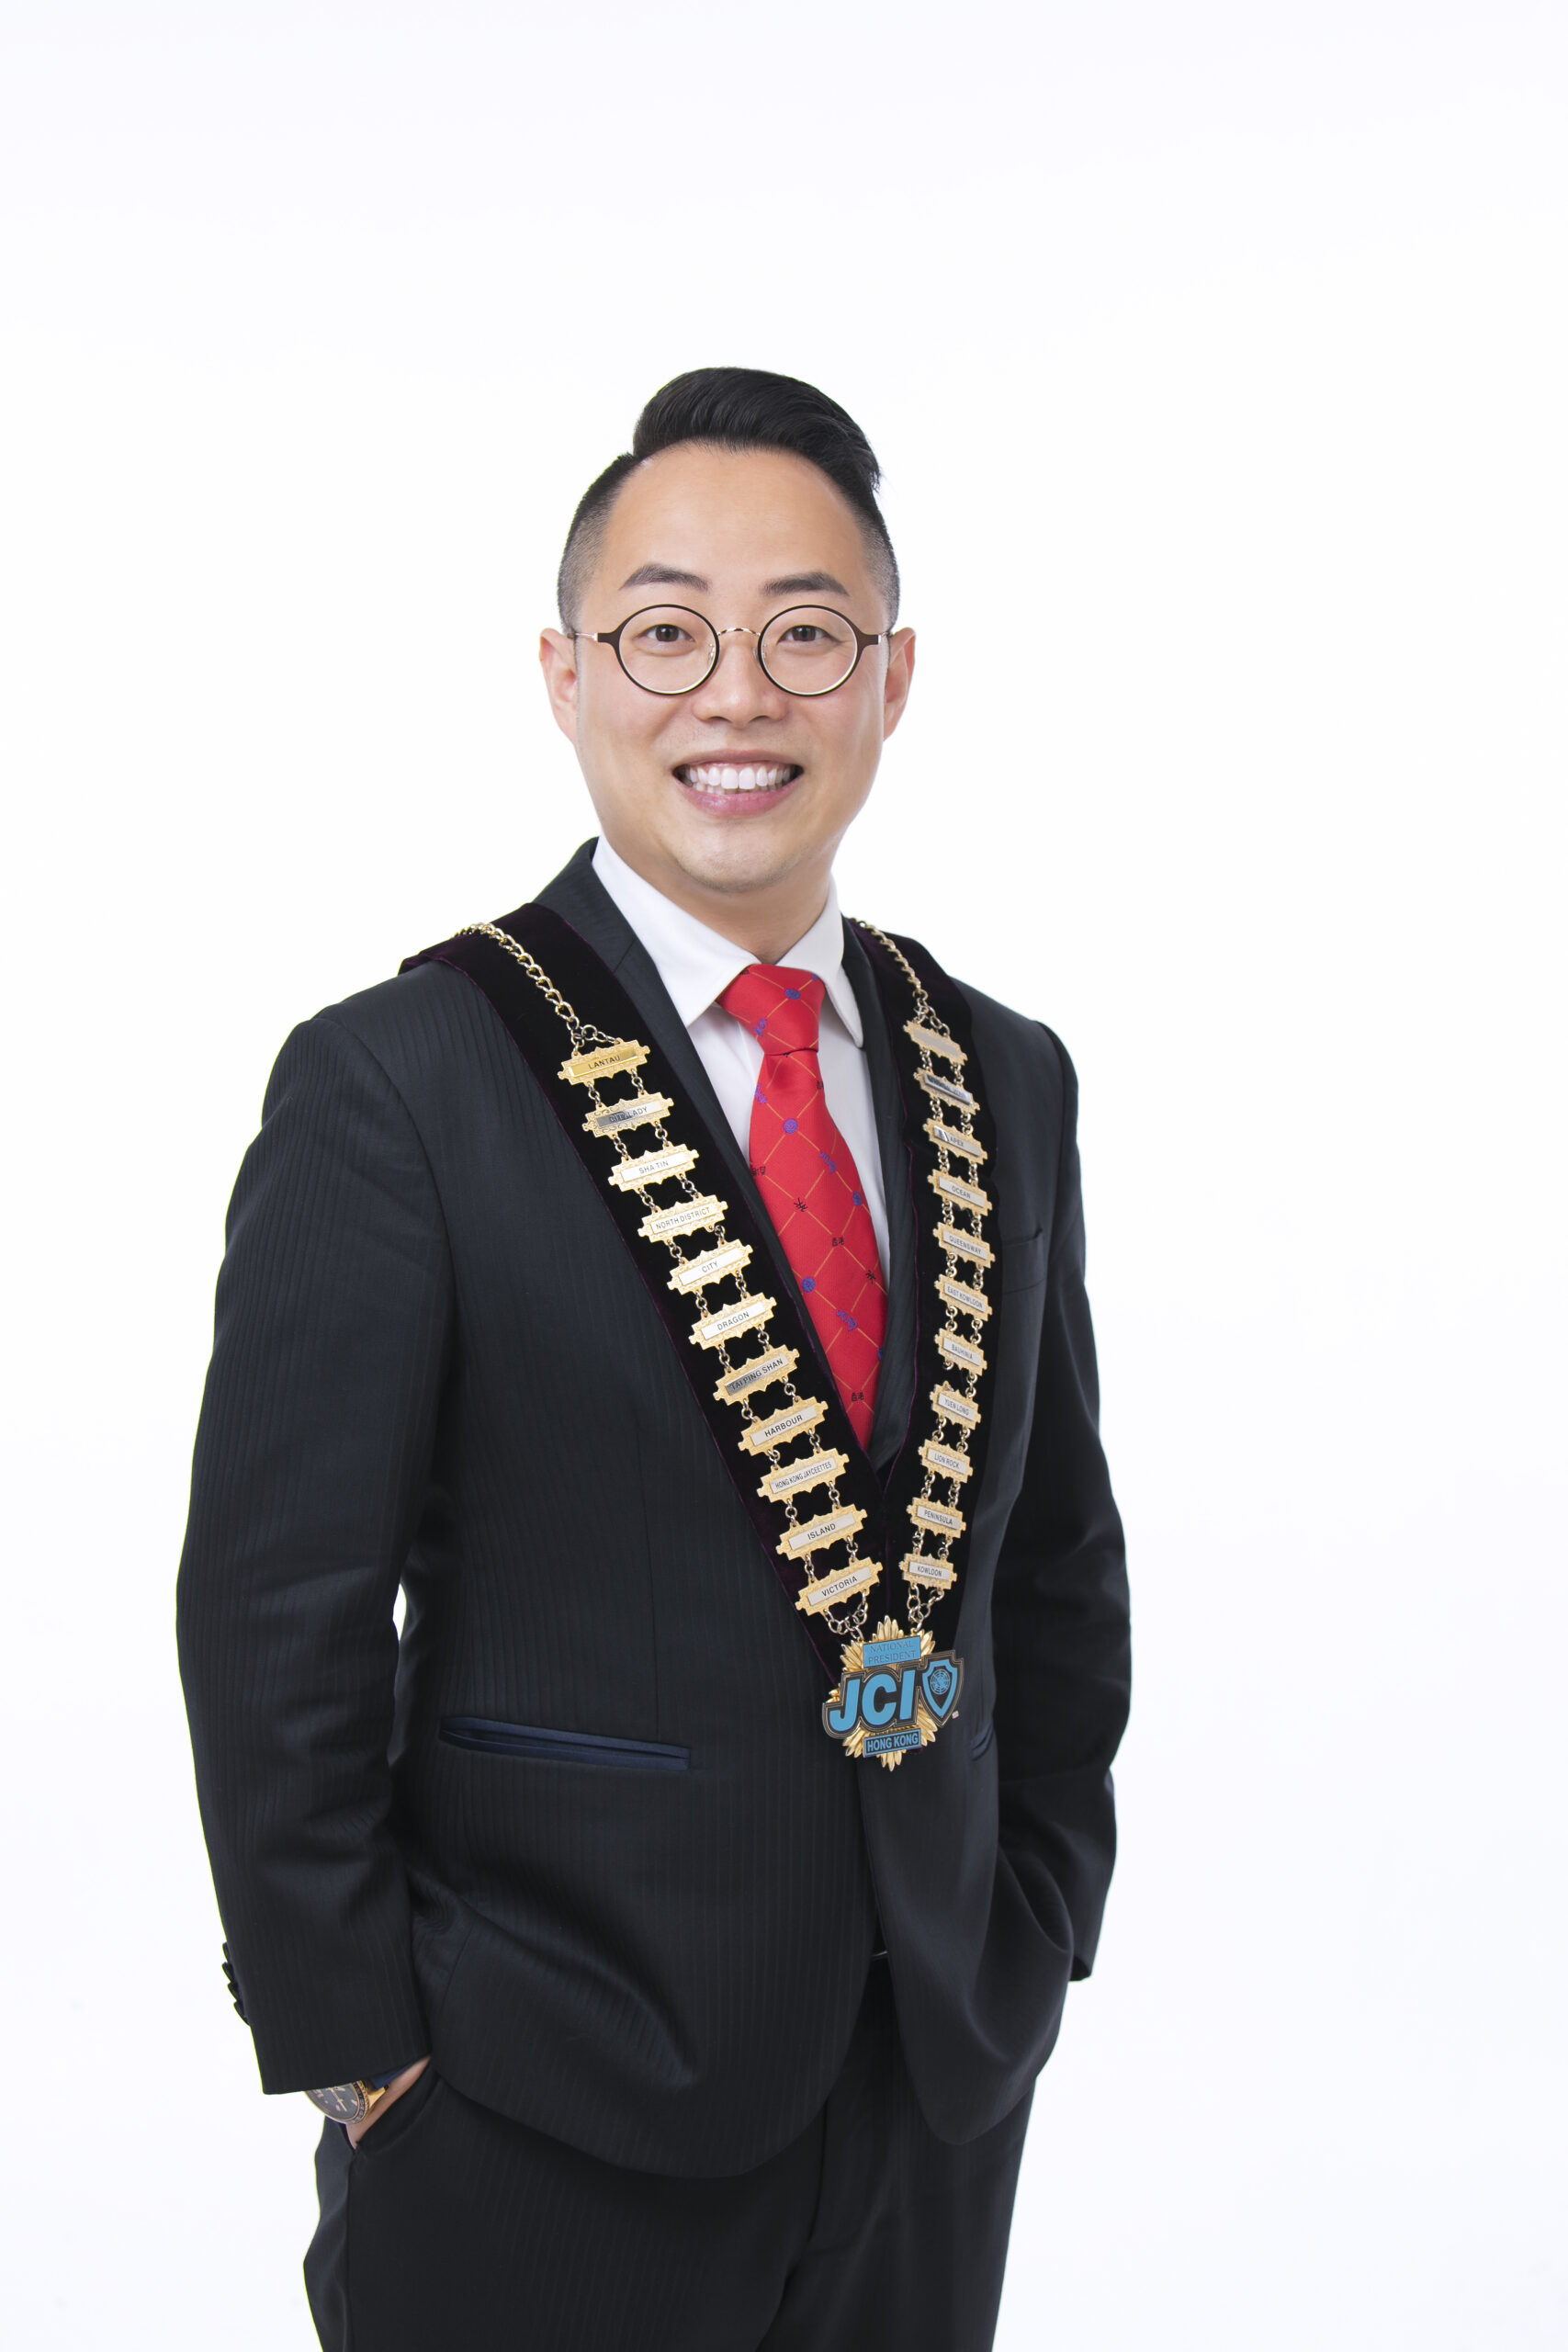 2022 National President Junior Chamber International Hong Kong